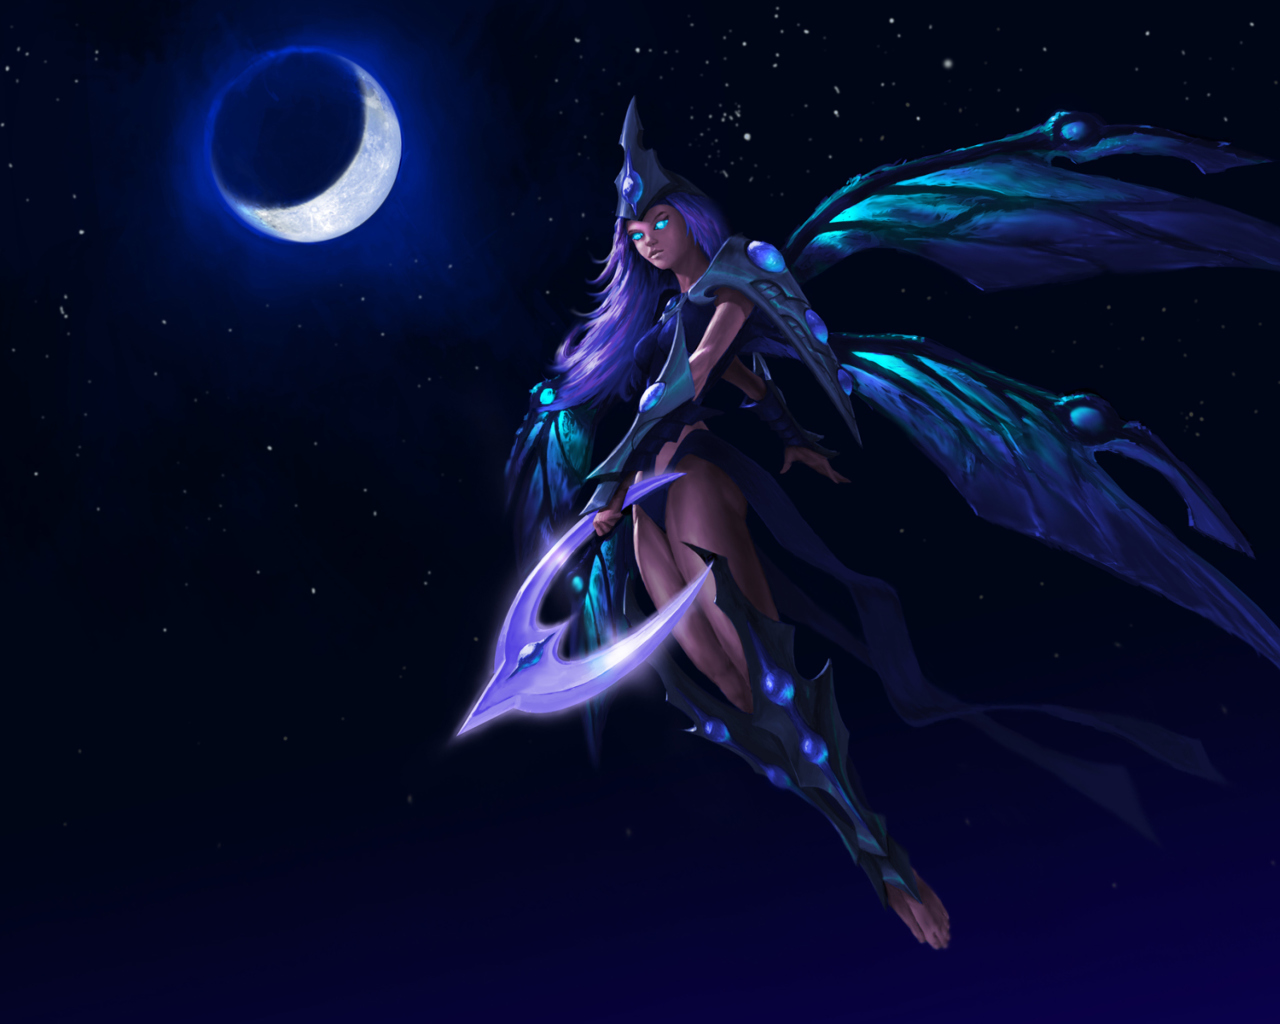 Anime Fairy Moon Queen Wallpaper for Fullscreen Desktop 1280x1024